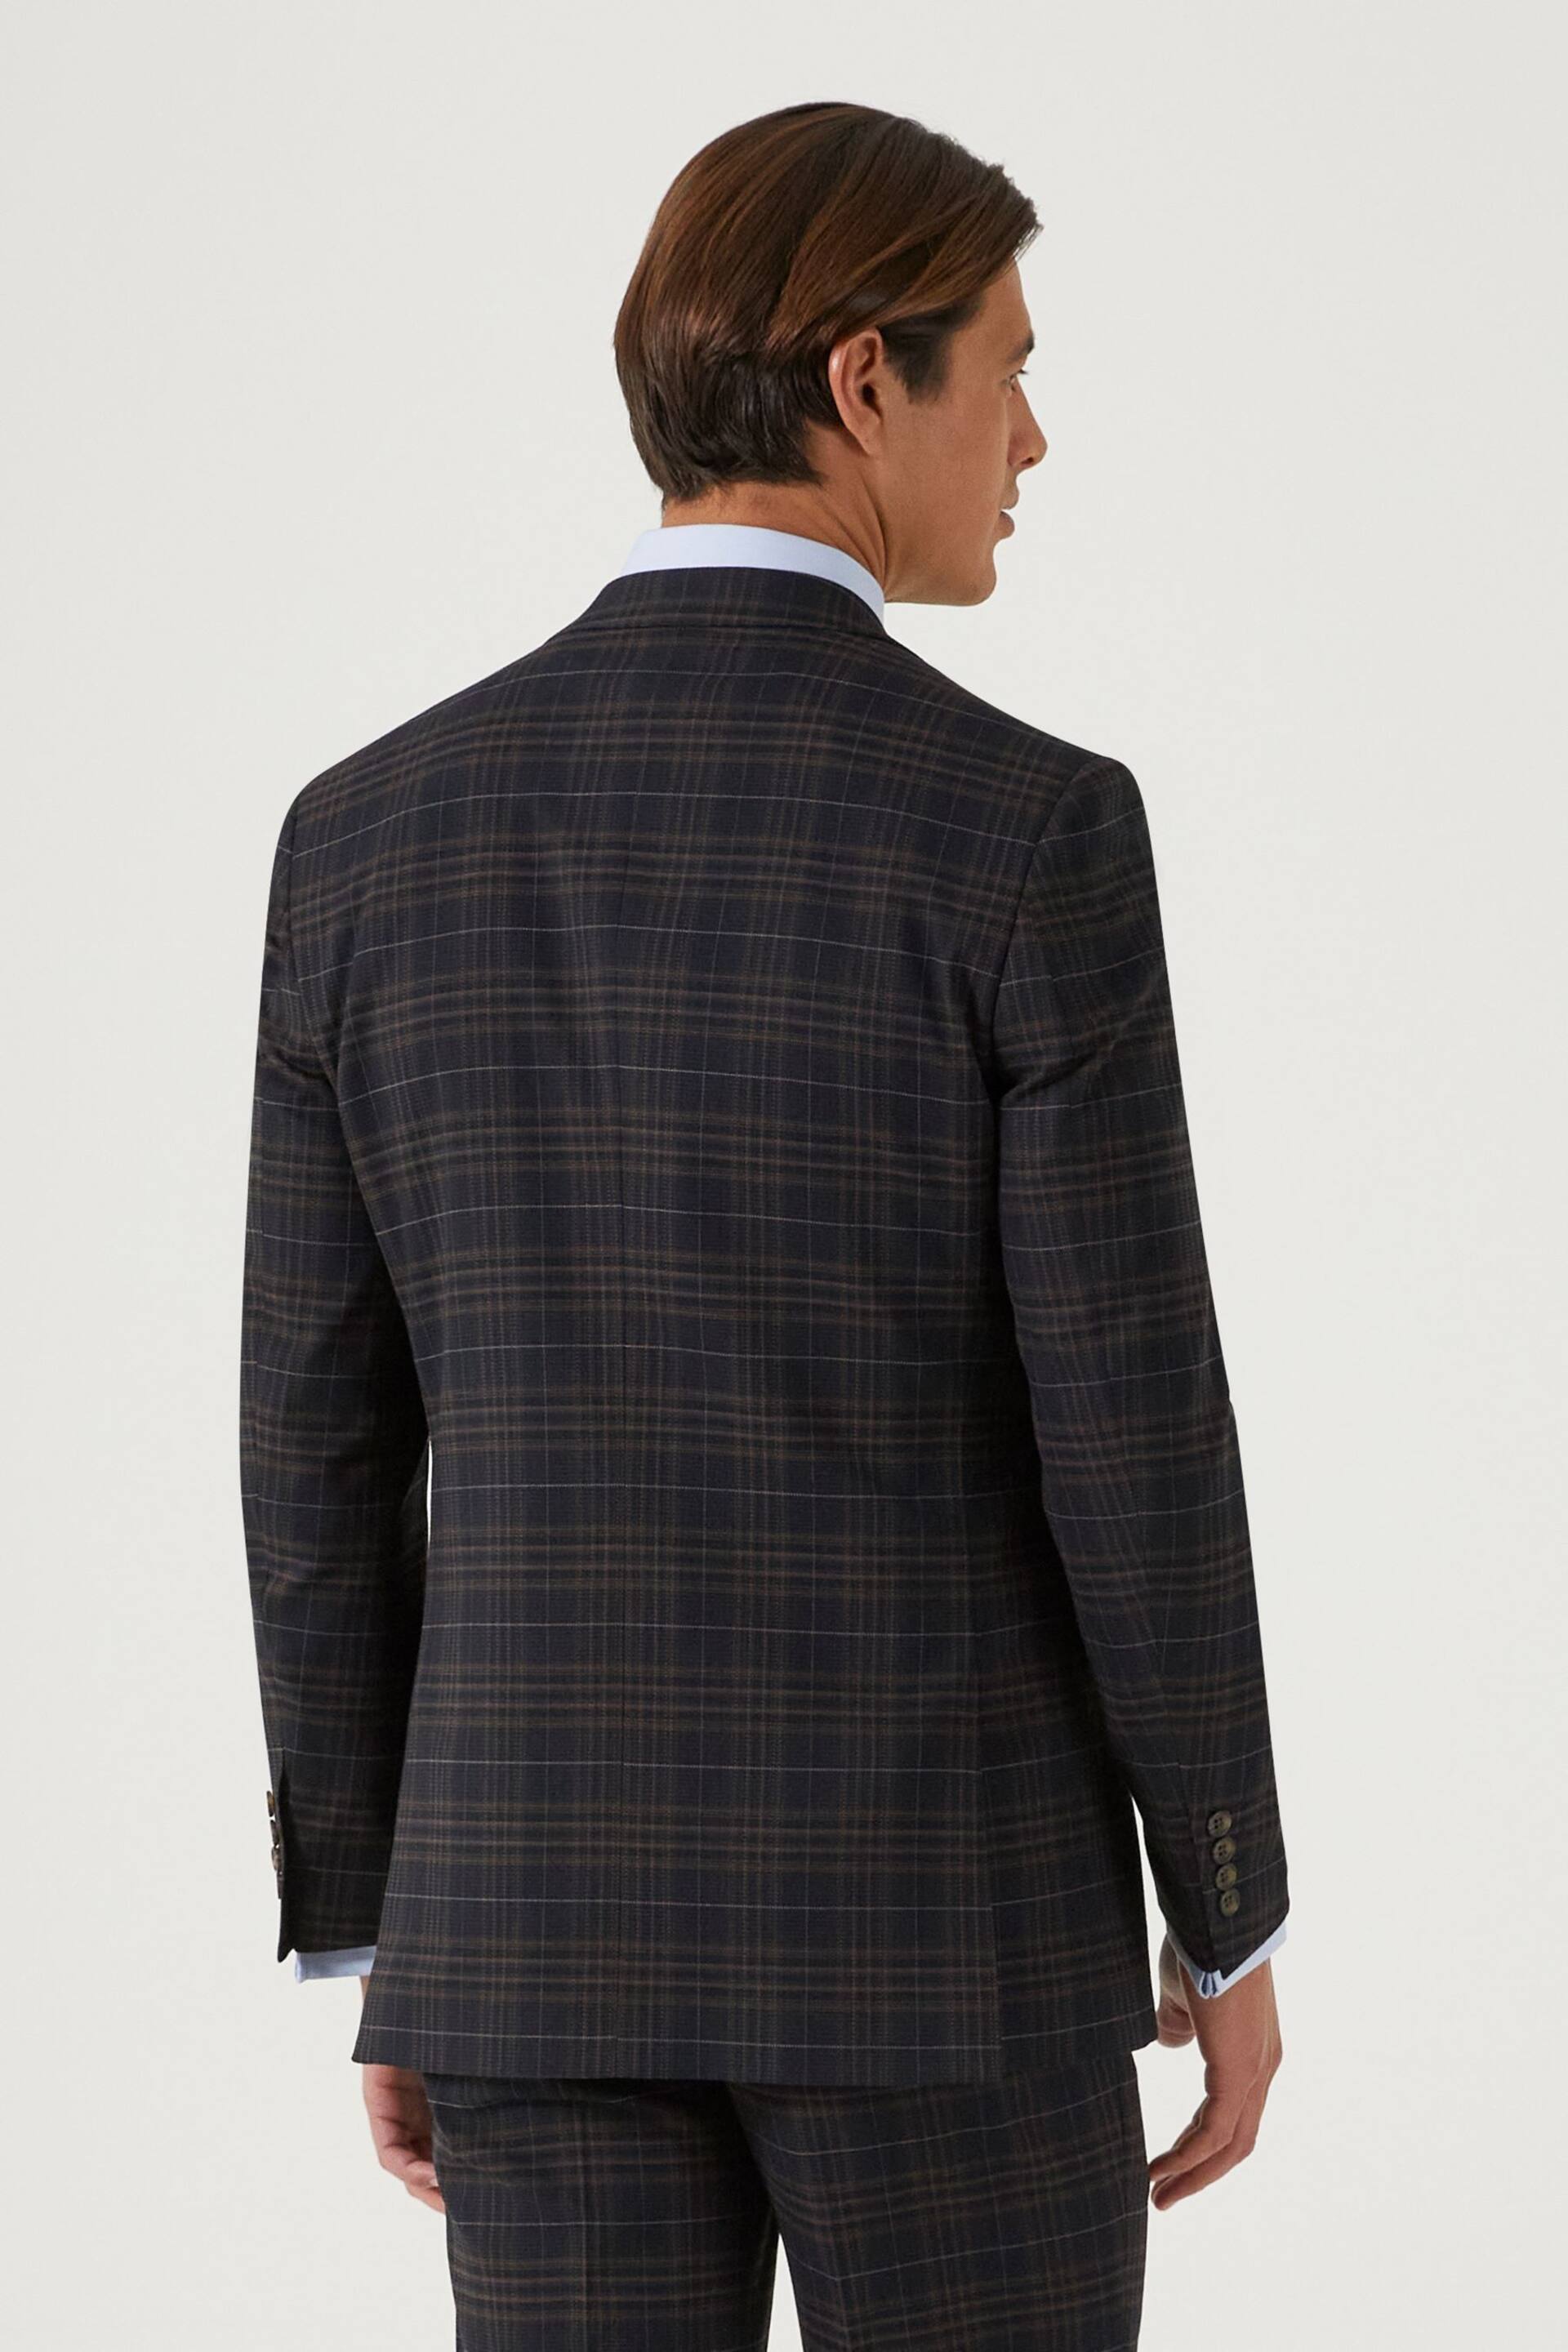 Skopes Alton Check Tailored Fit Black Suit Jacket - Image 3 of 5